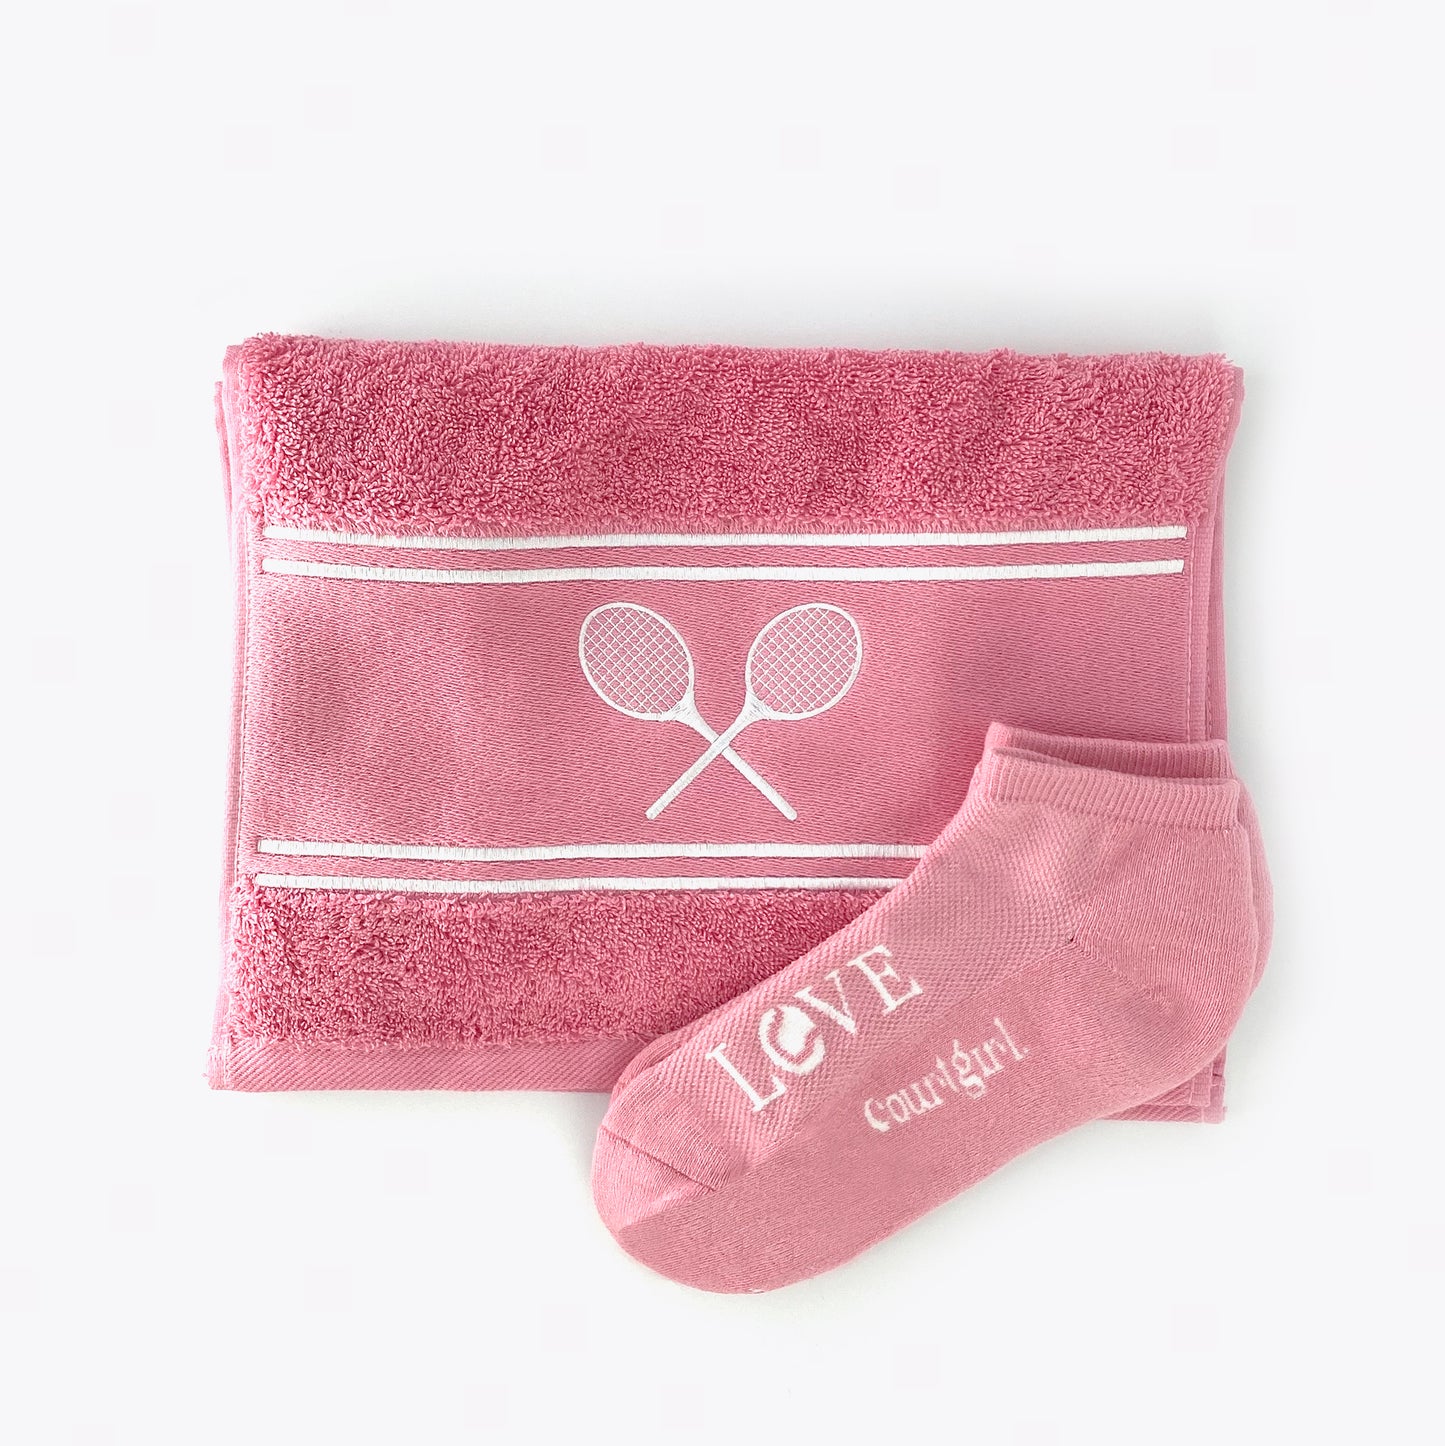 Matchtime Tennis Towel—Pink